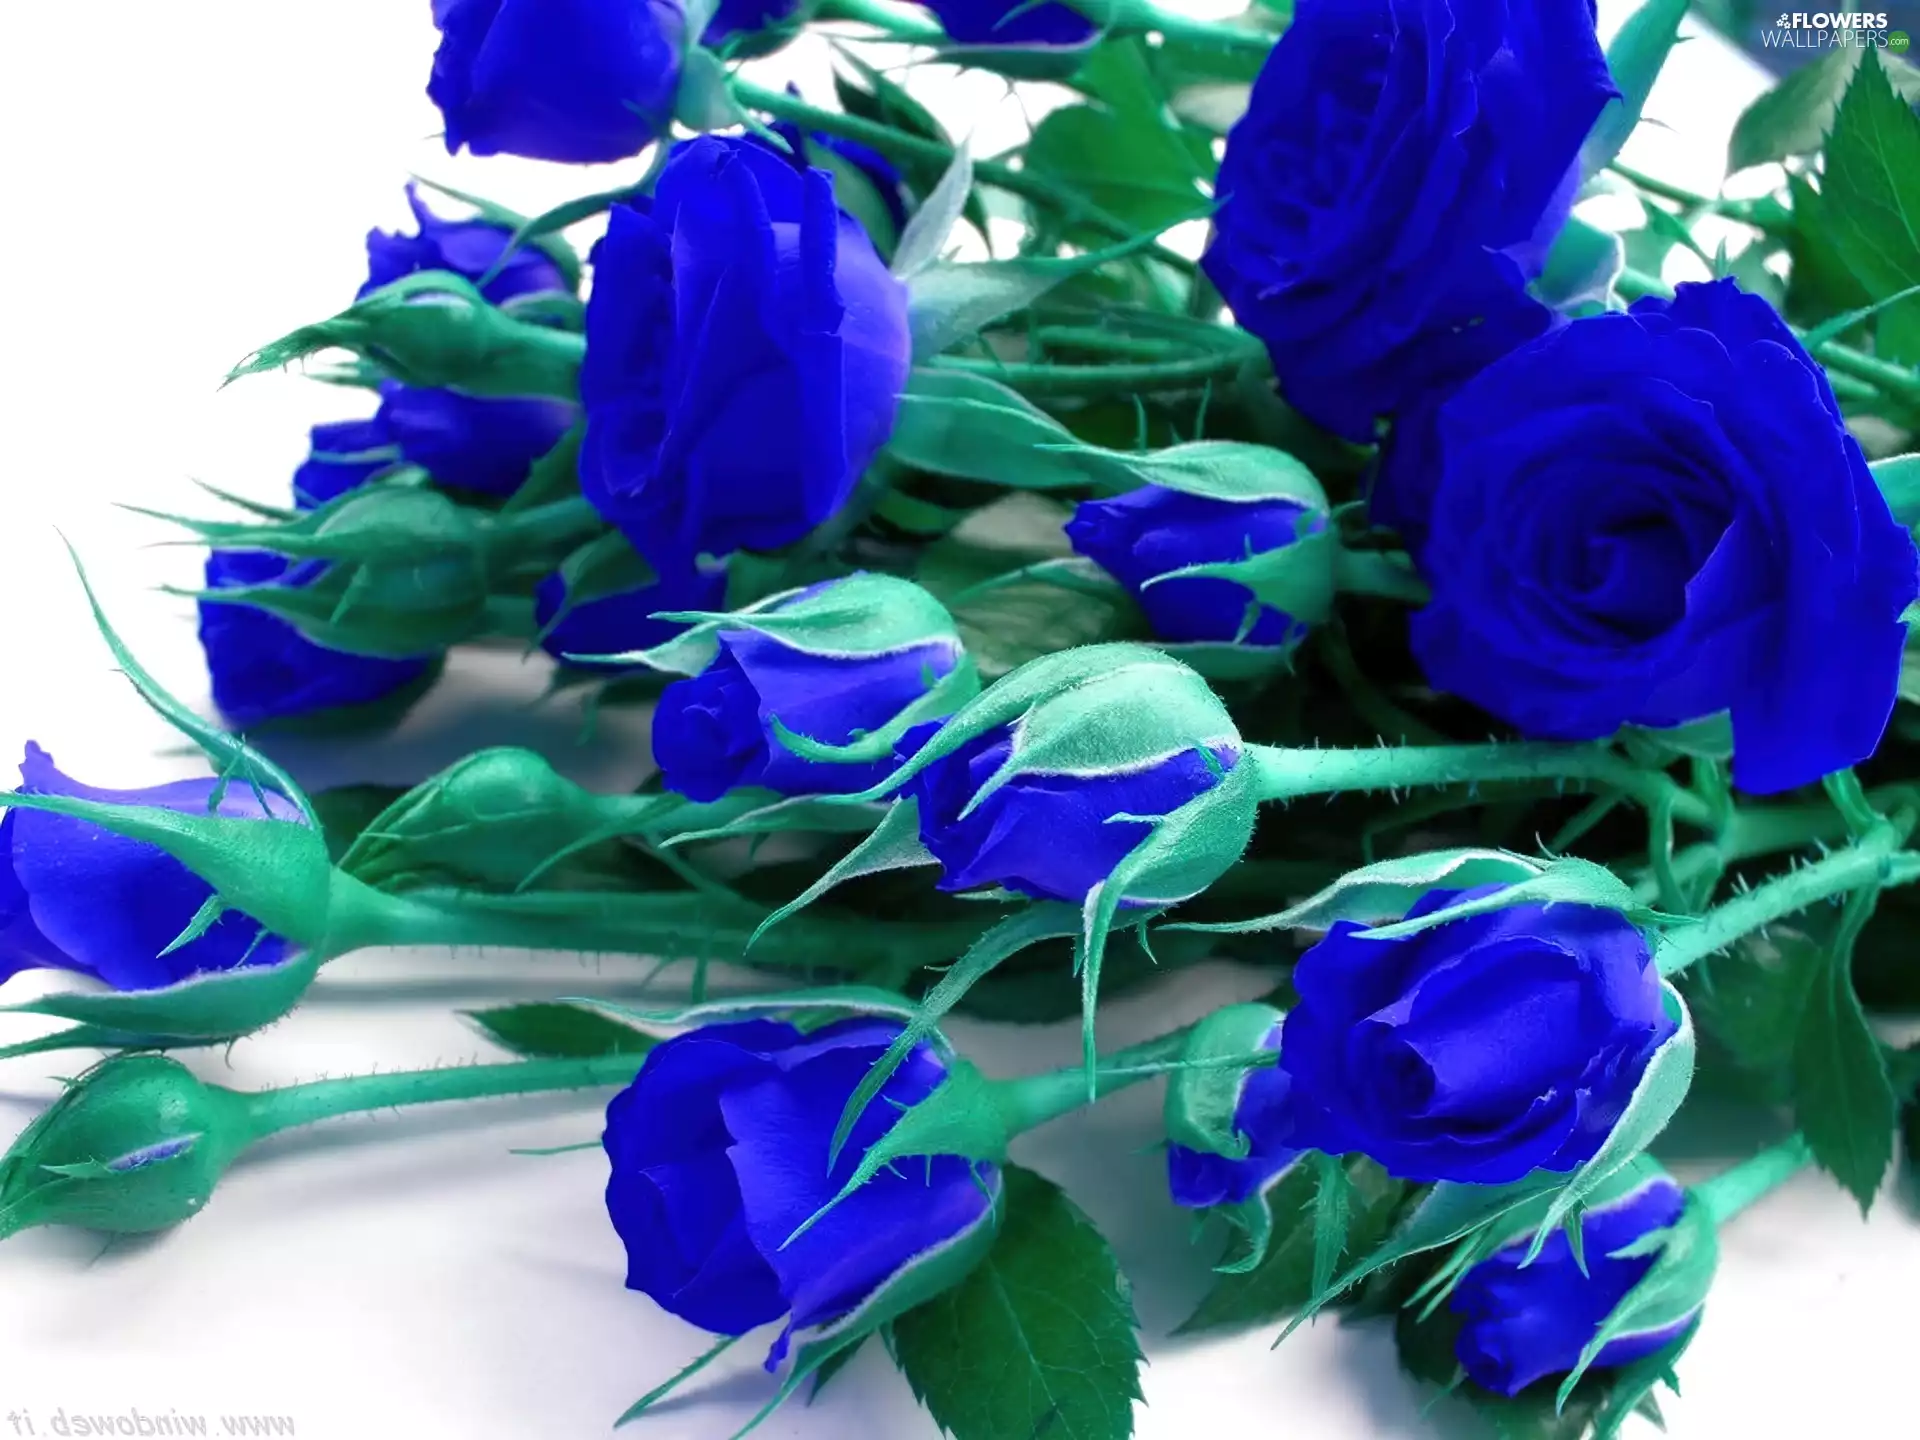 Blue, roses